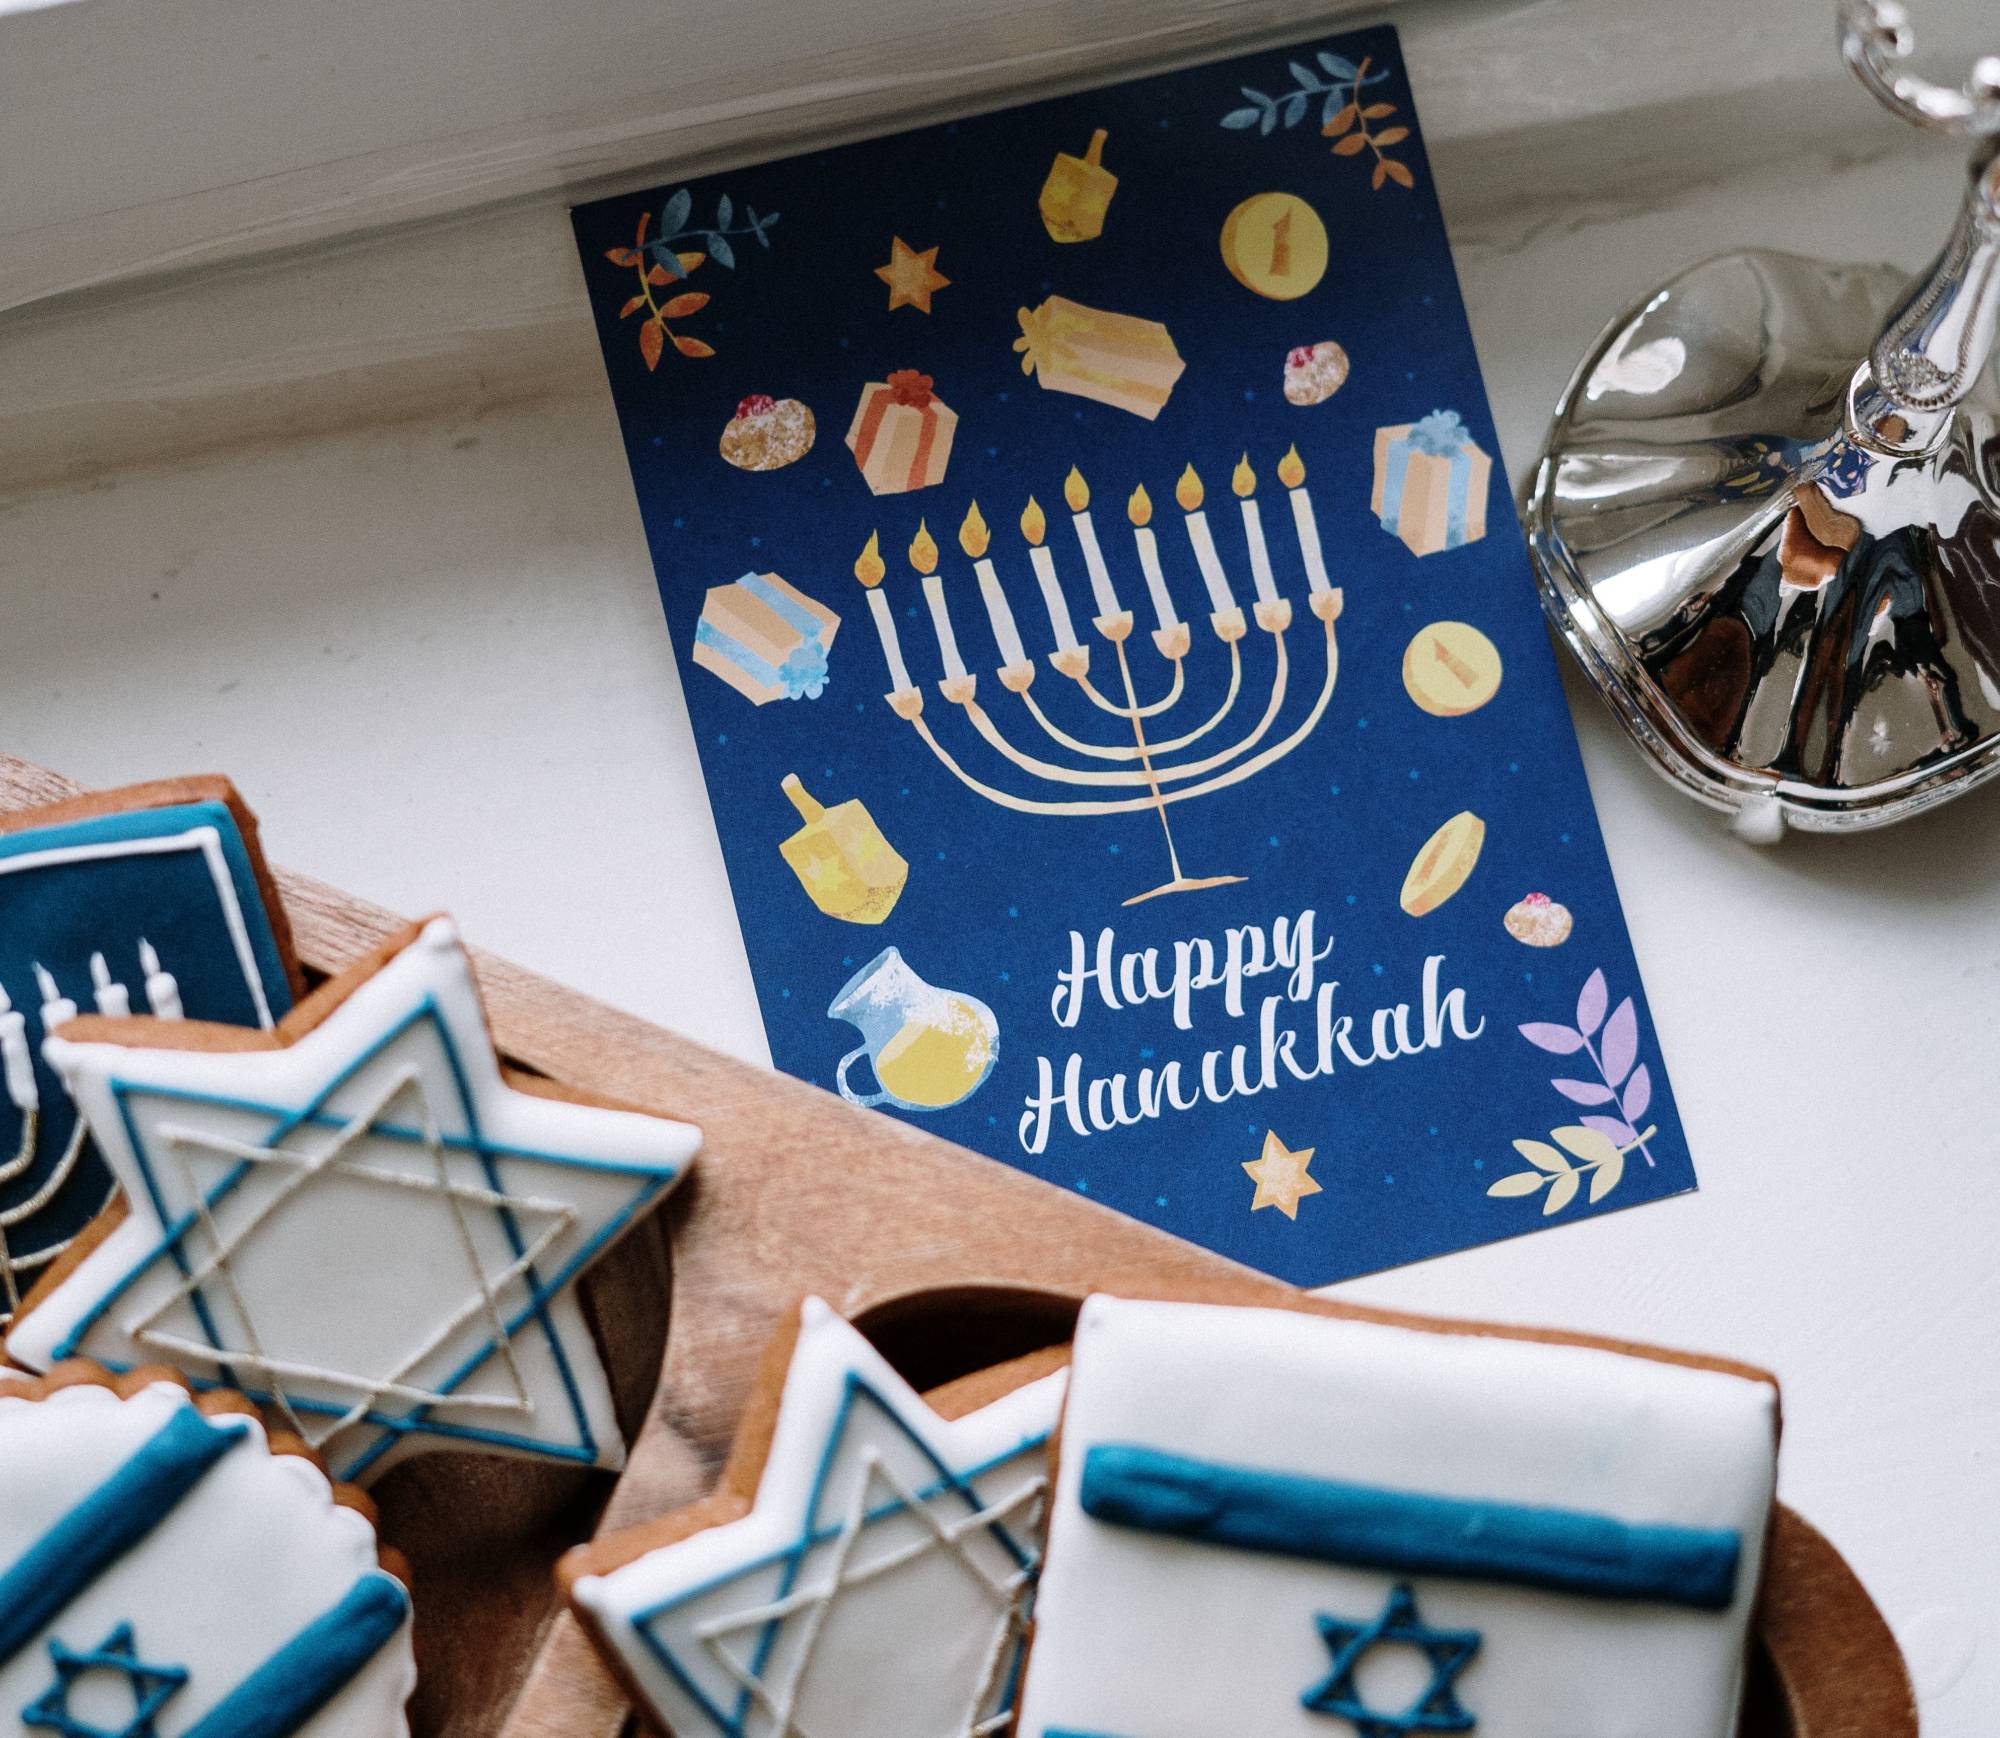 Hanukkah themed cookies and card